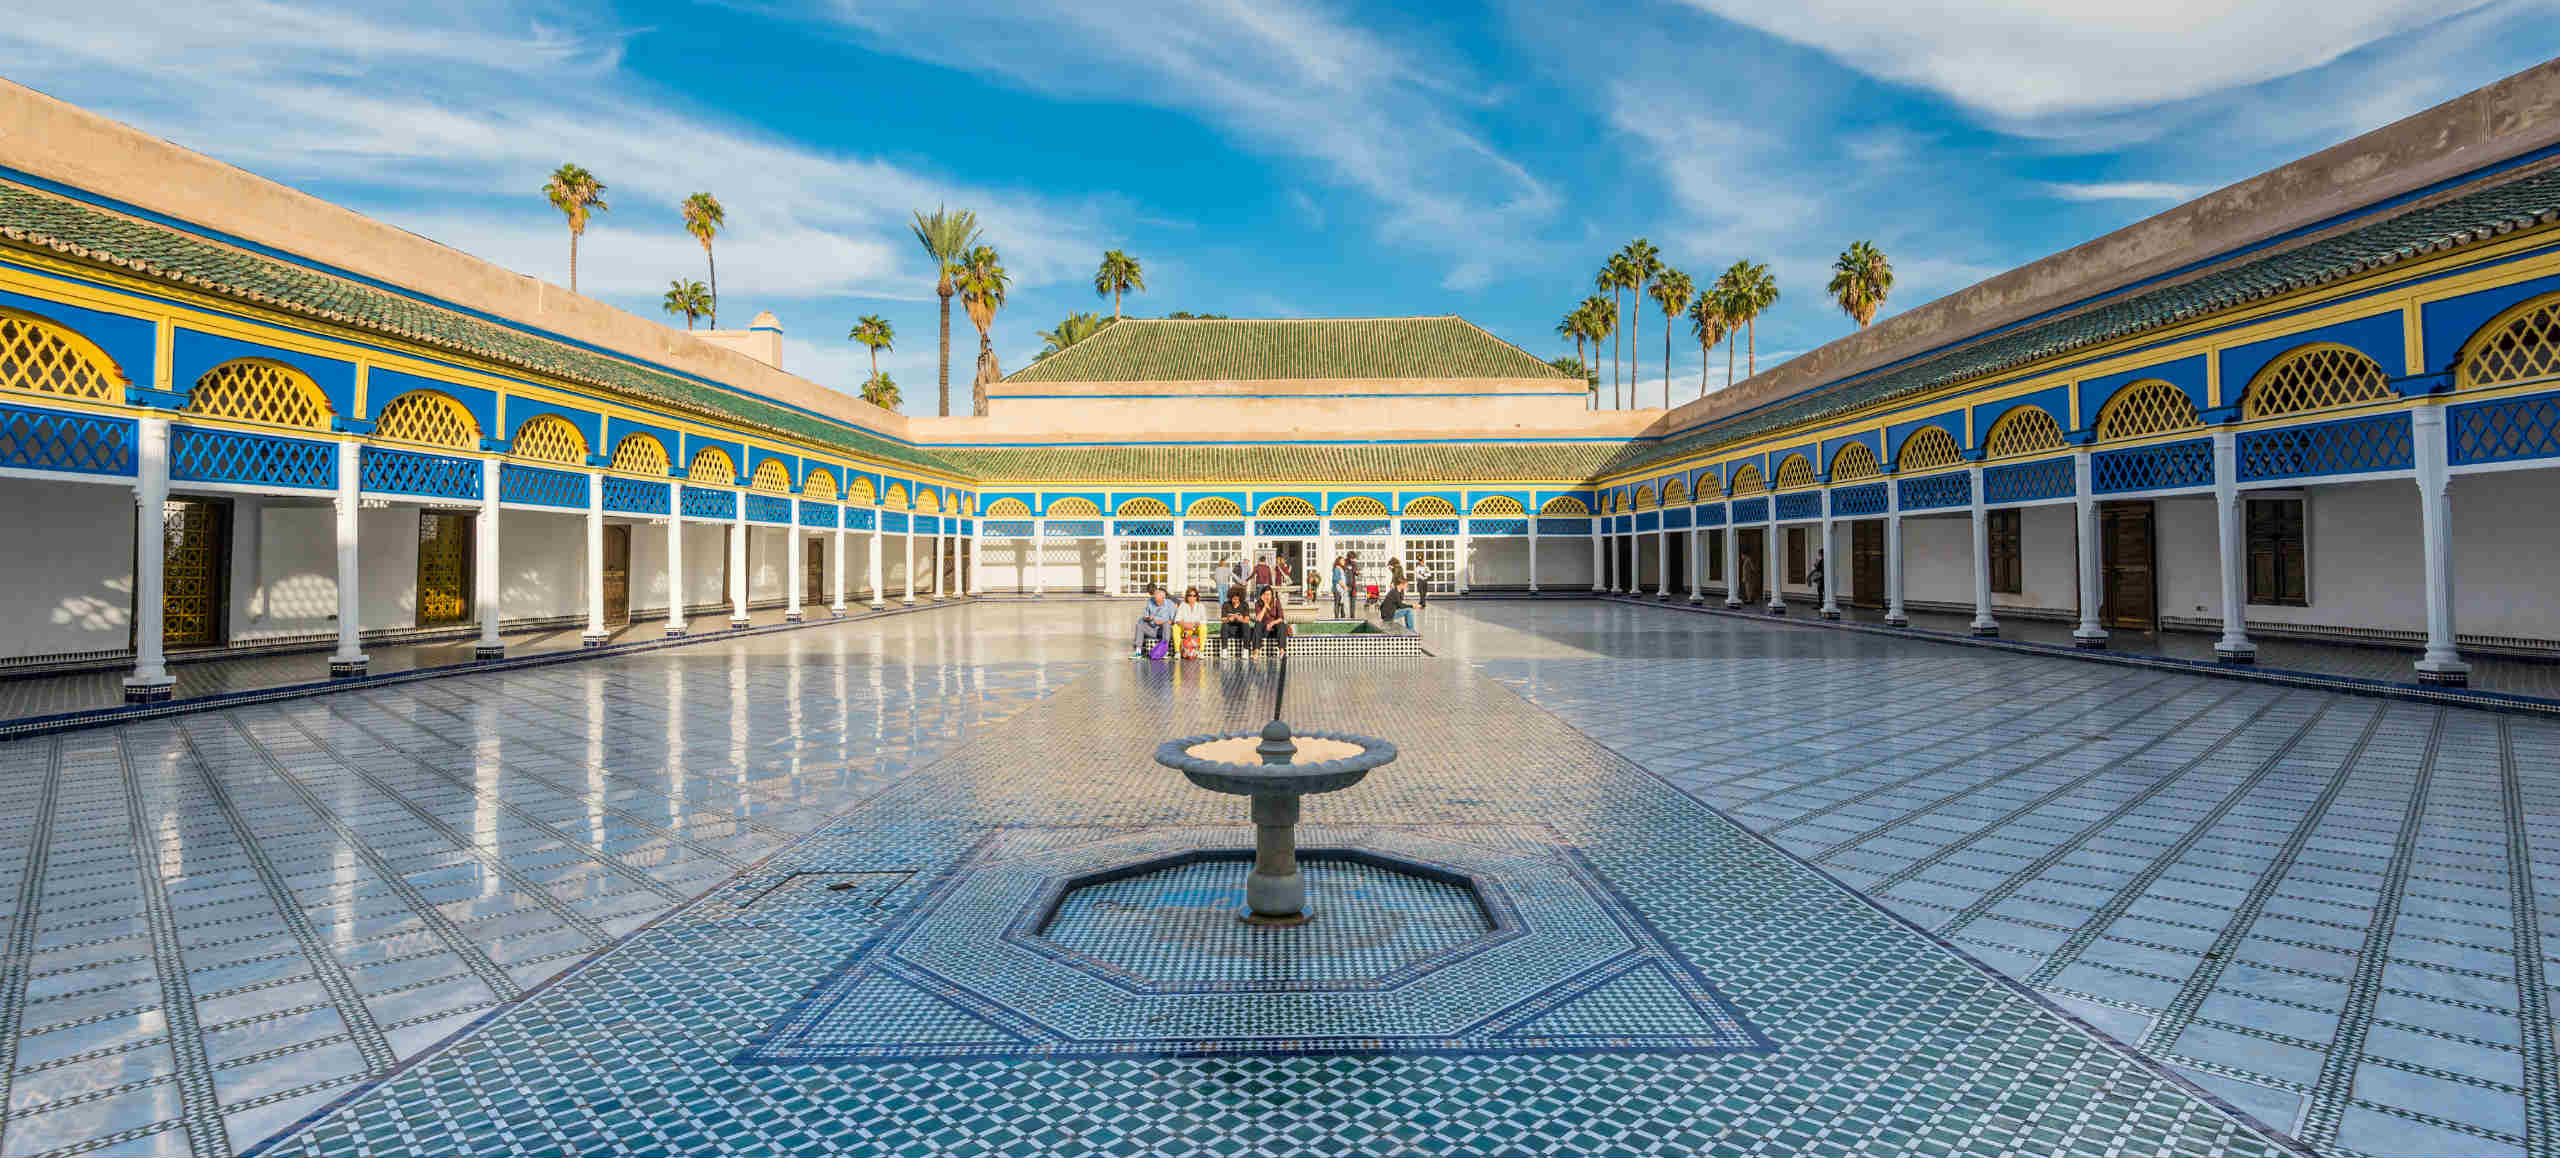 Séminaire Marrakech